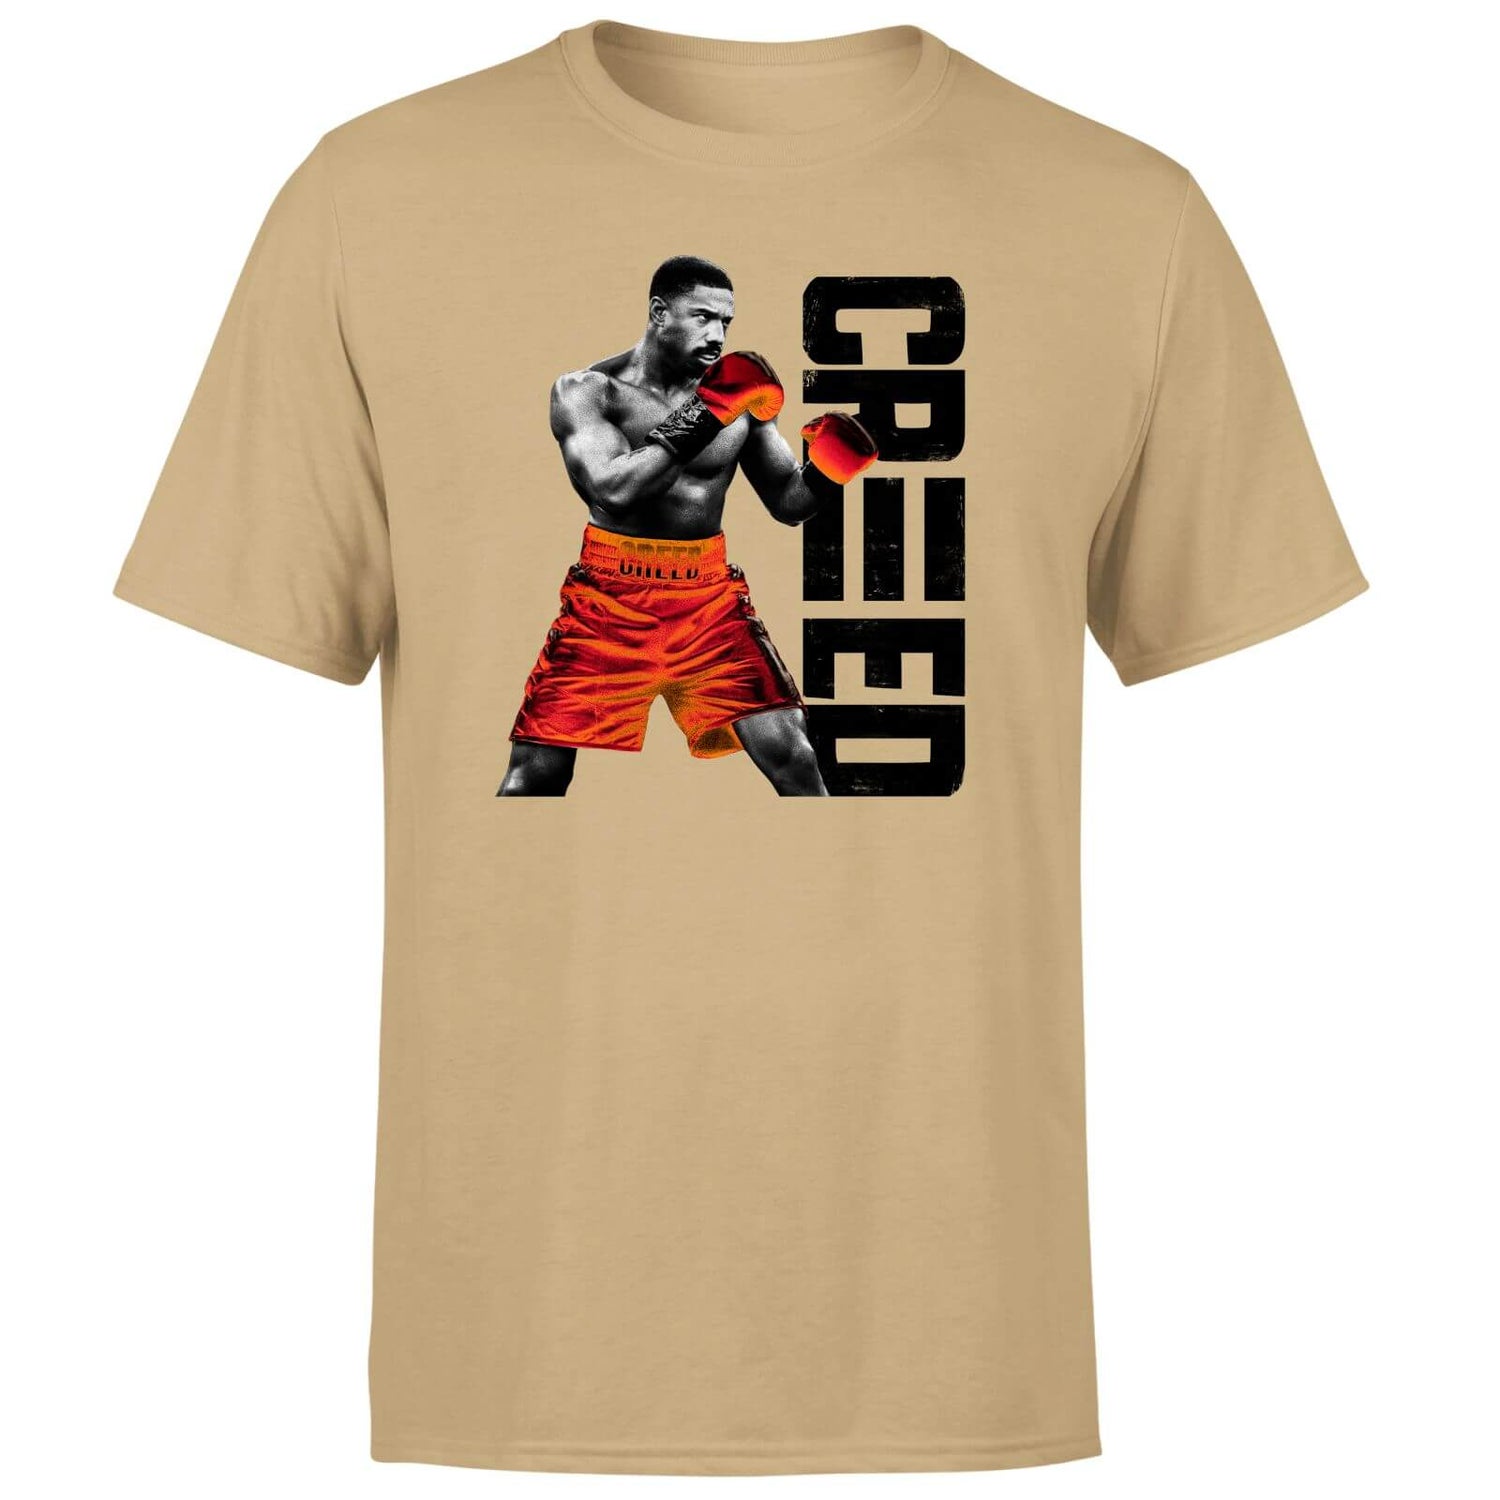 Creed CRIIID Men's T-Shirt - Tan